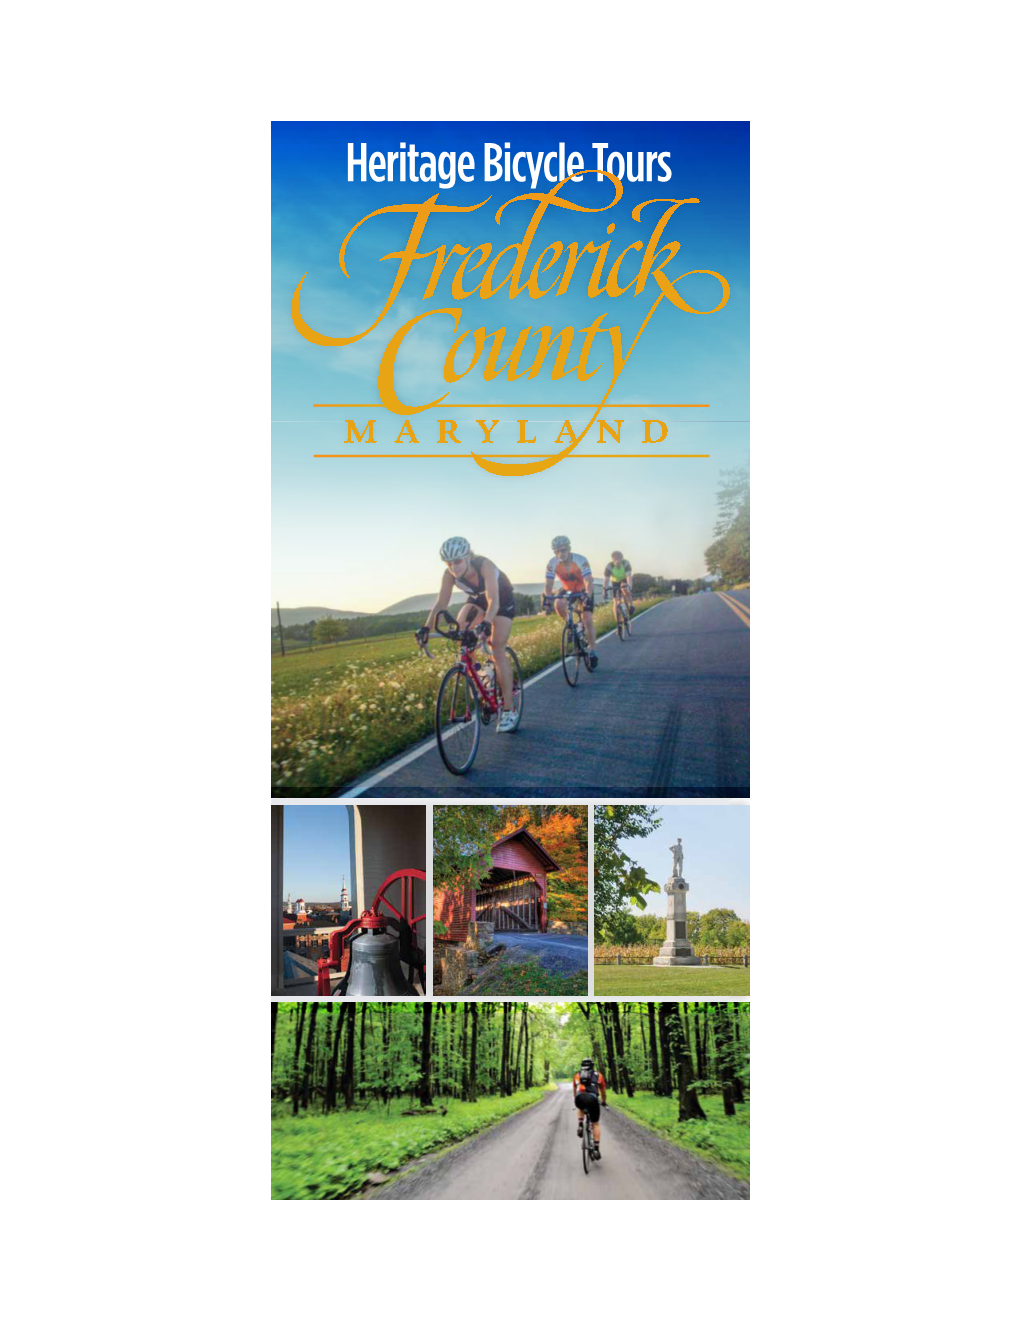 Heritage Bicycle Tours Brochure